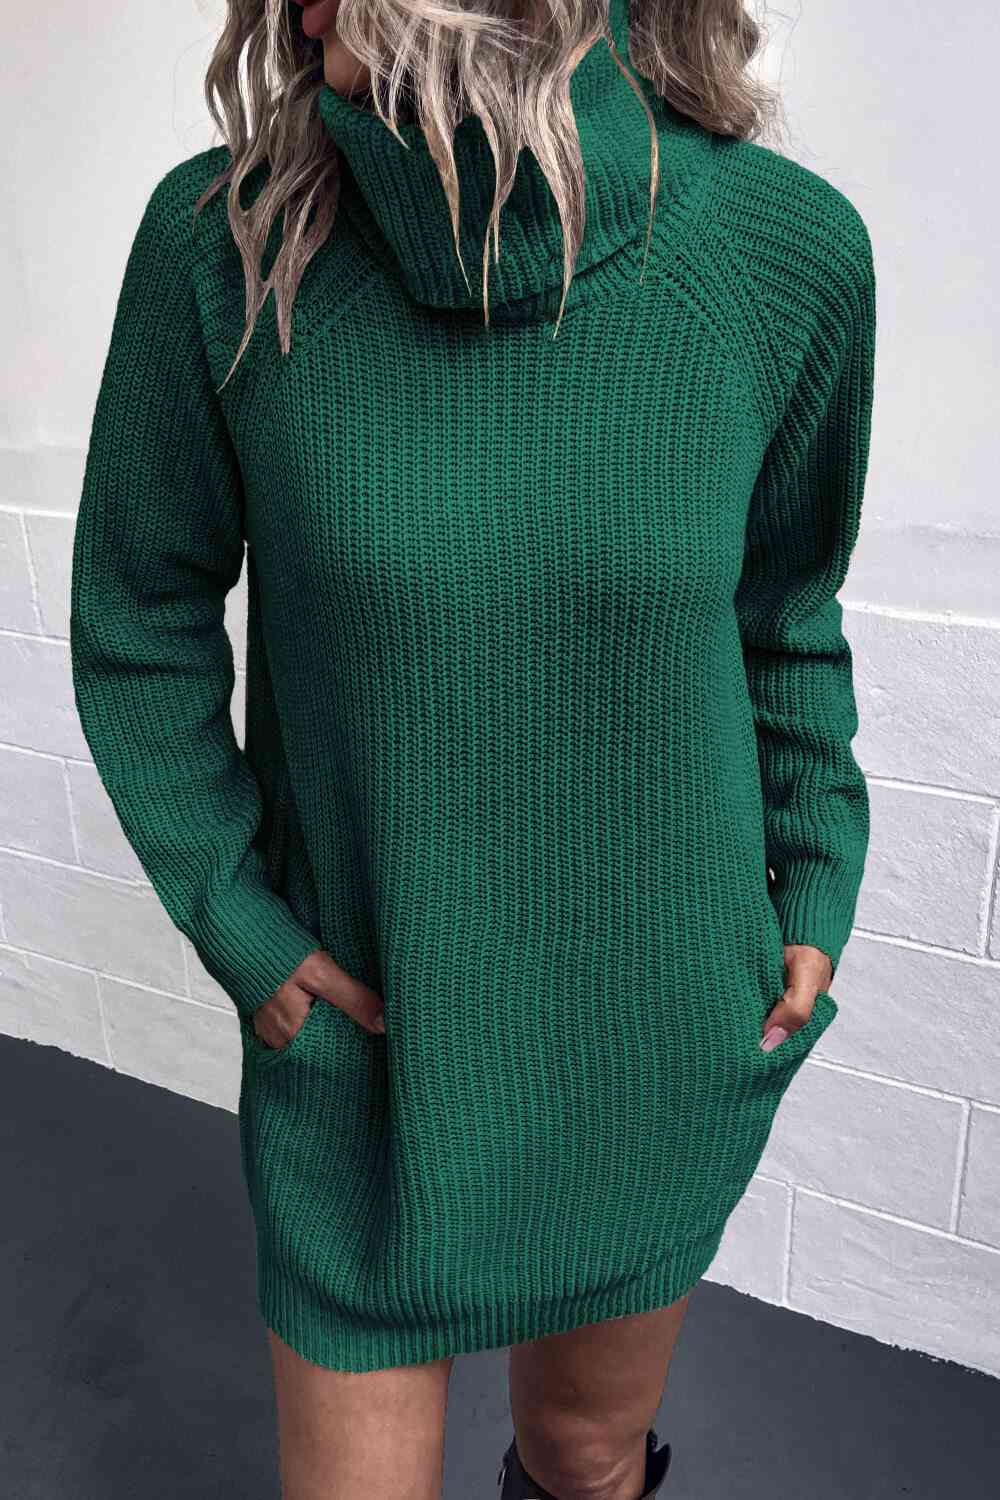 Meliza's Turtleneck Sweater Dress with Pockets